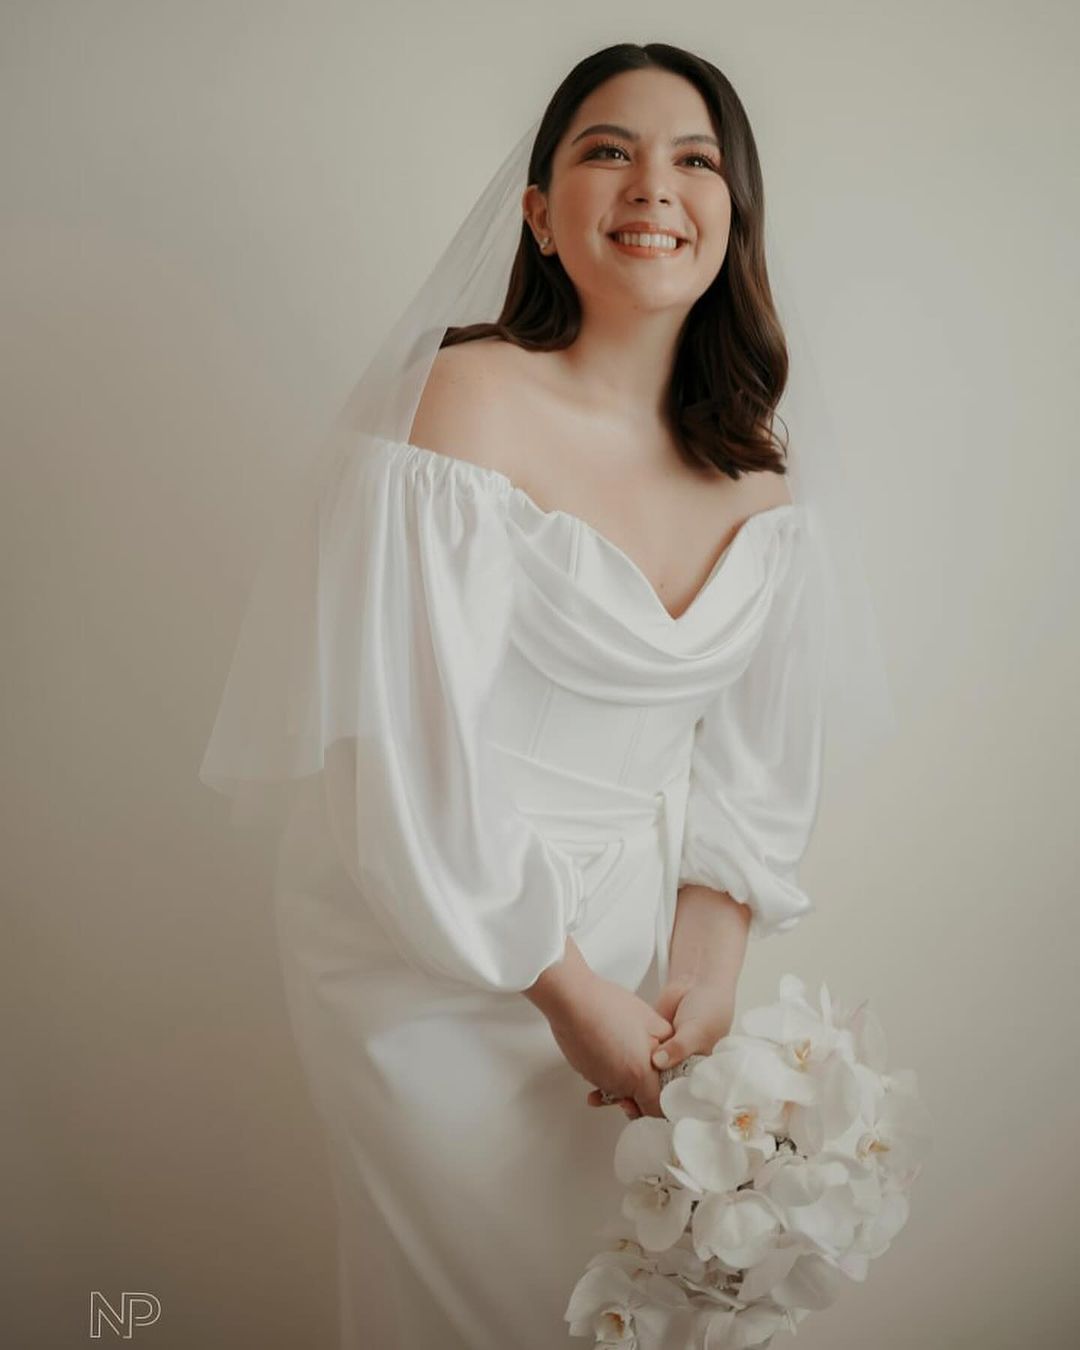 Ria Atayde wore a Martin Bautista dress at her civil wedding